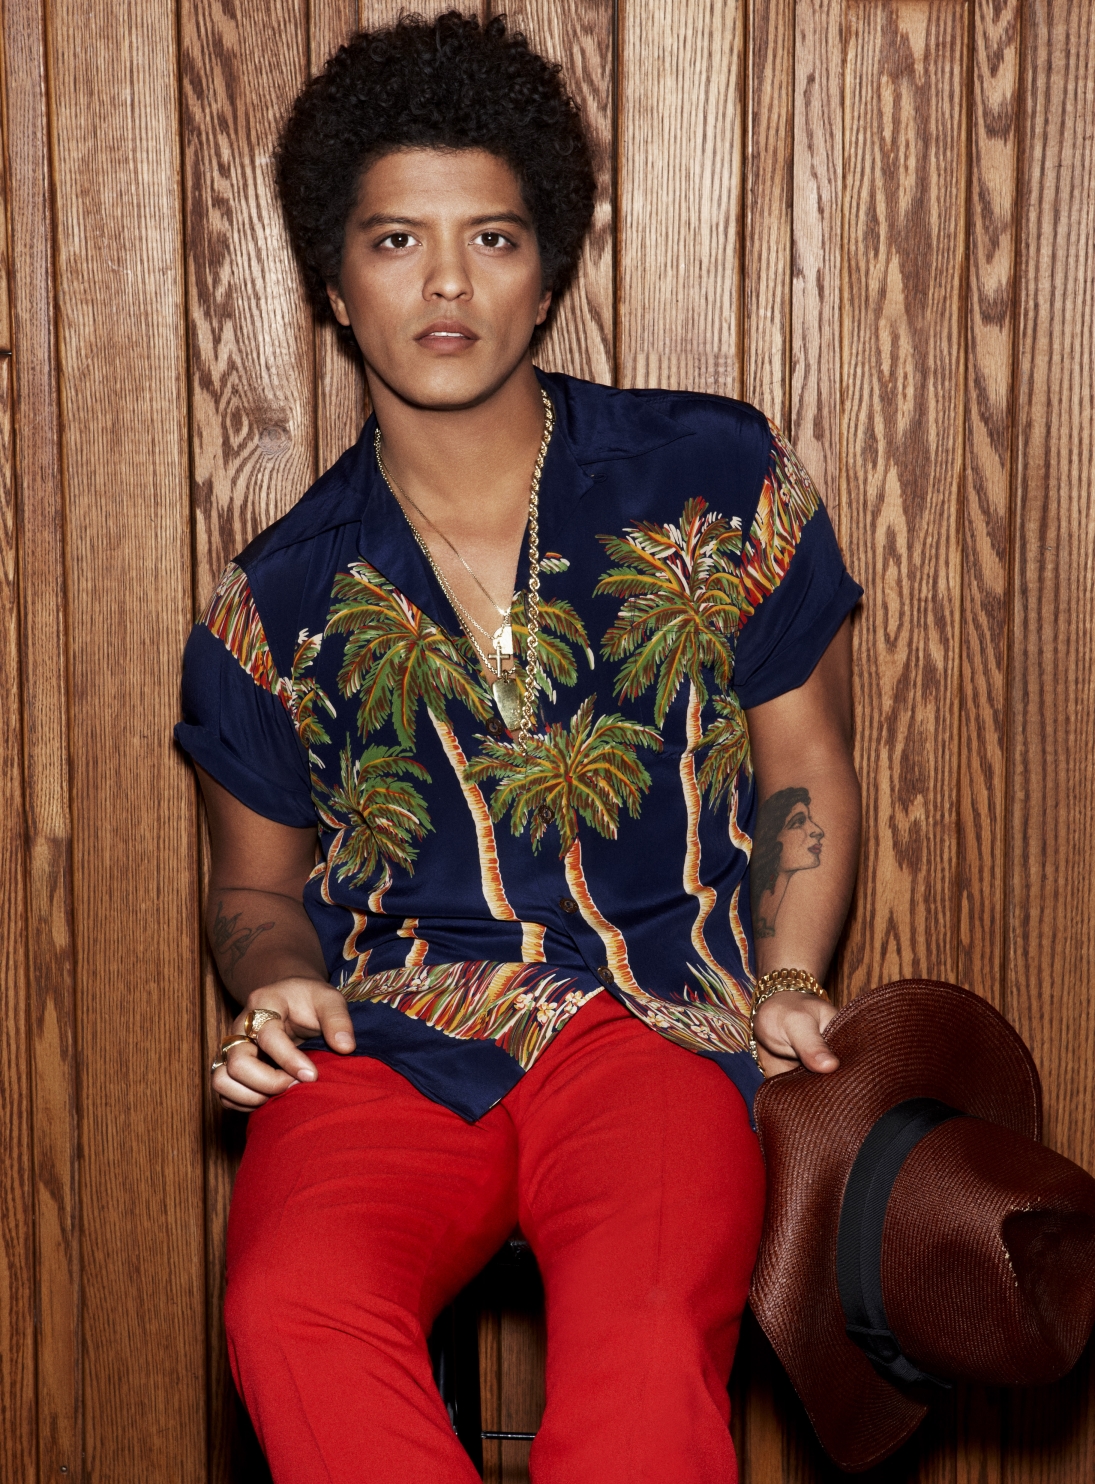 Bruno Mars Super Bowl 2014: Singer Invites Group To Join Halftime Show 